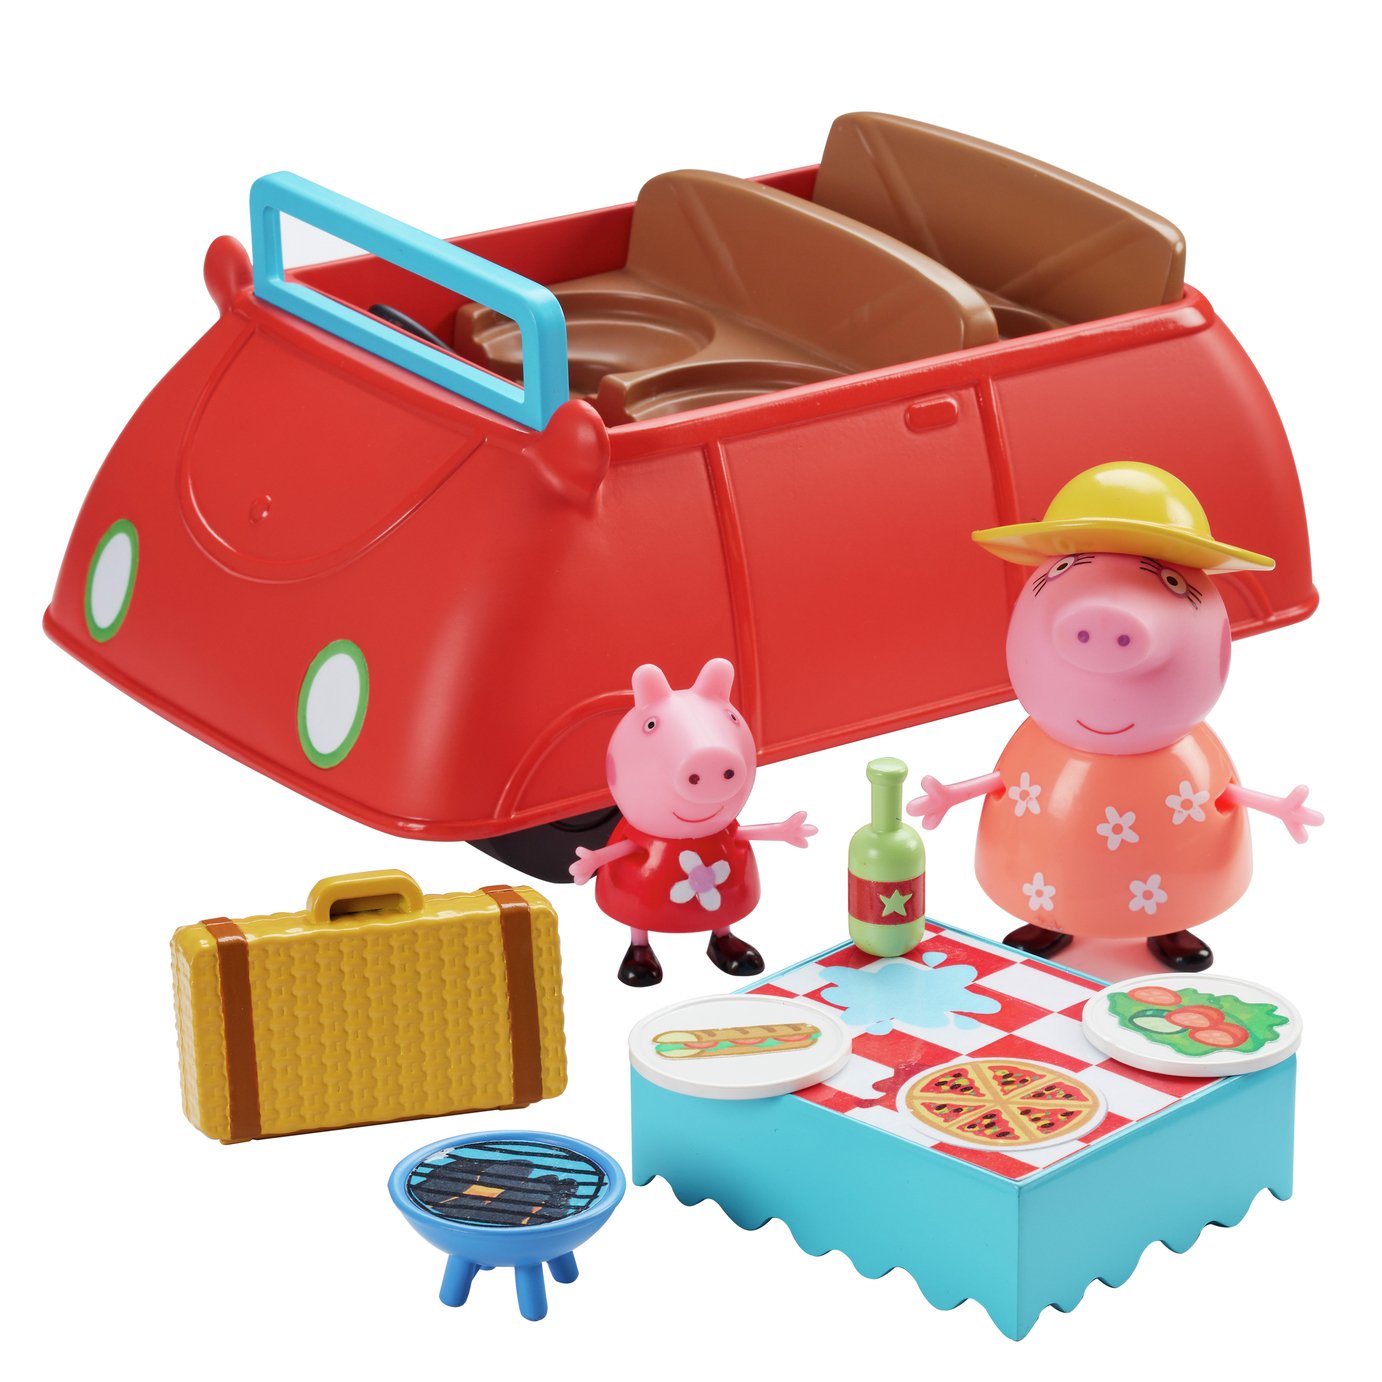 peppa pig toy set